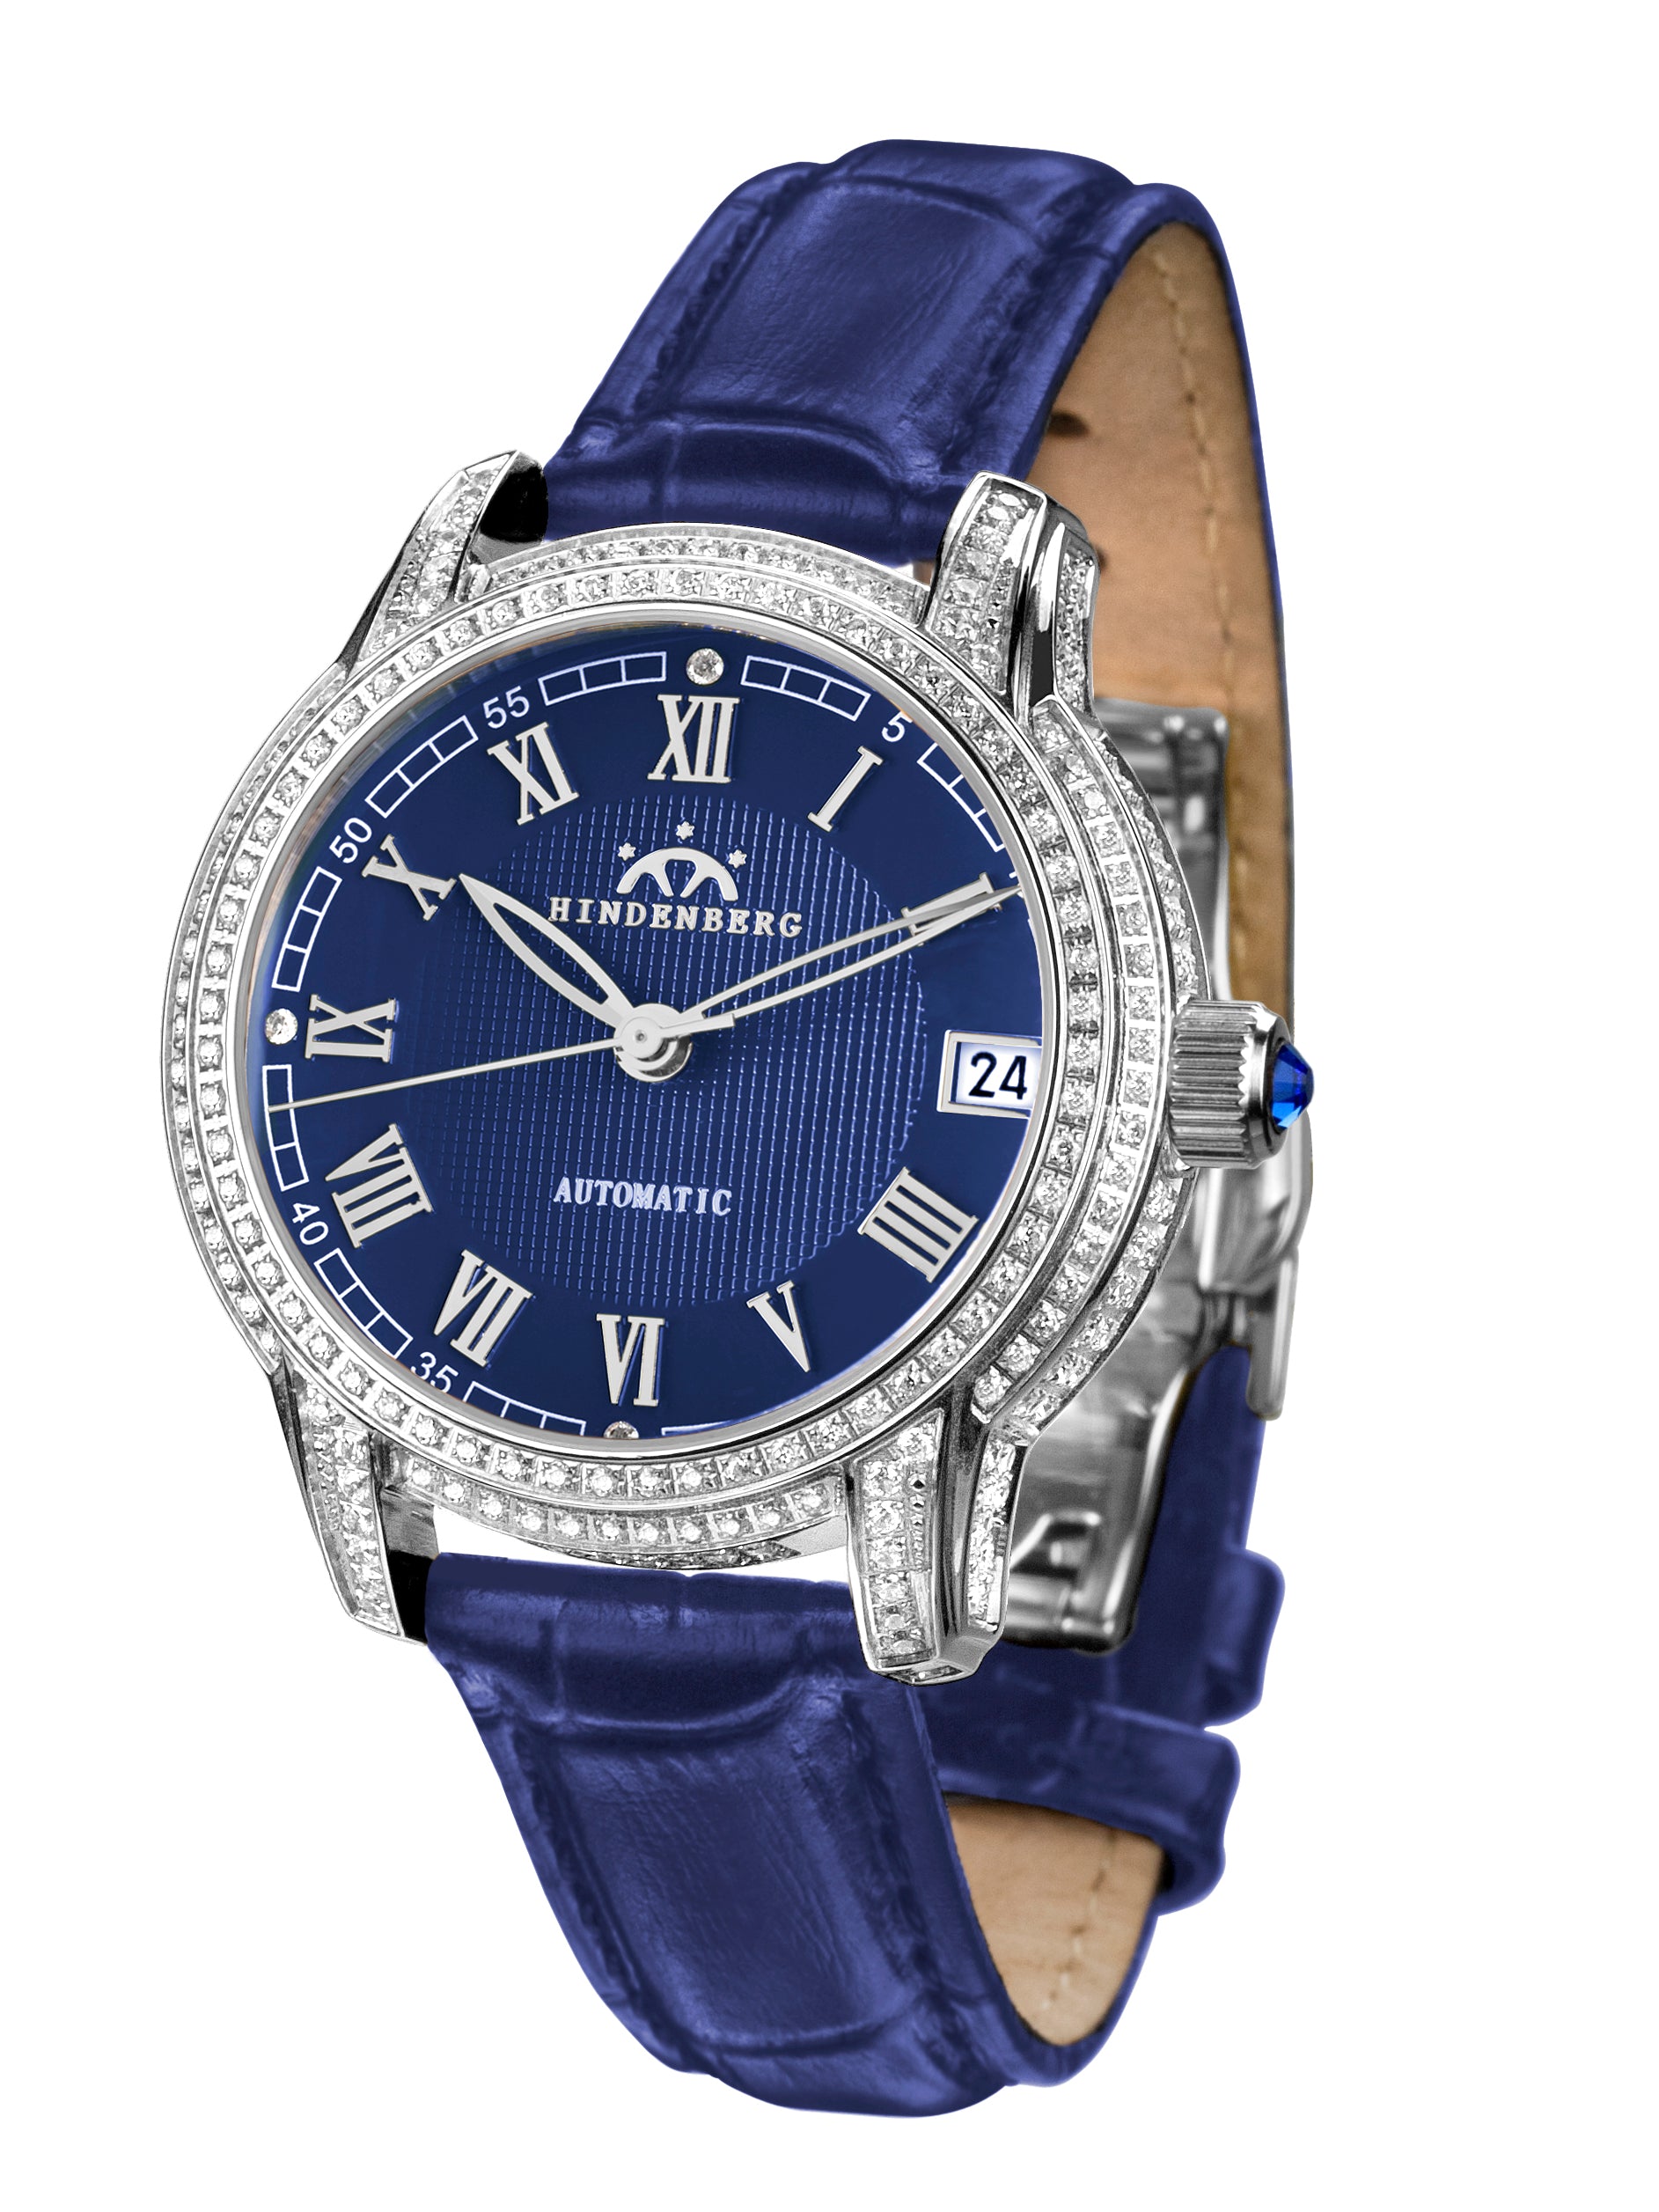 Automatic watches — Duchess II — Hindenberg — stahl blau